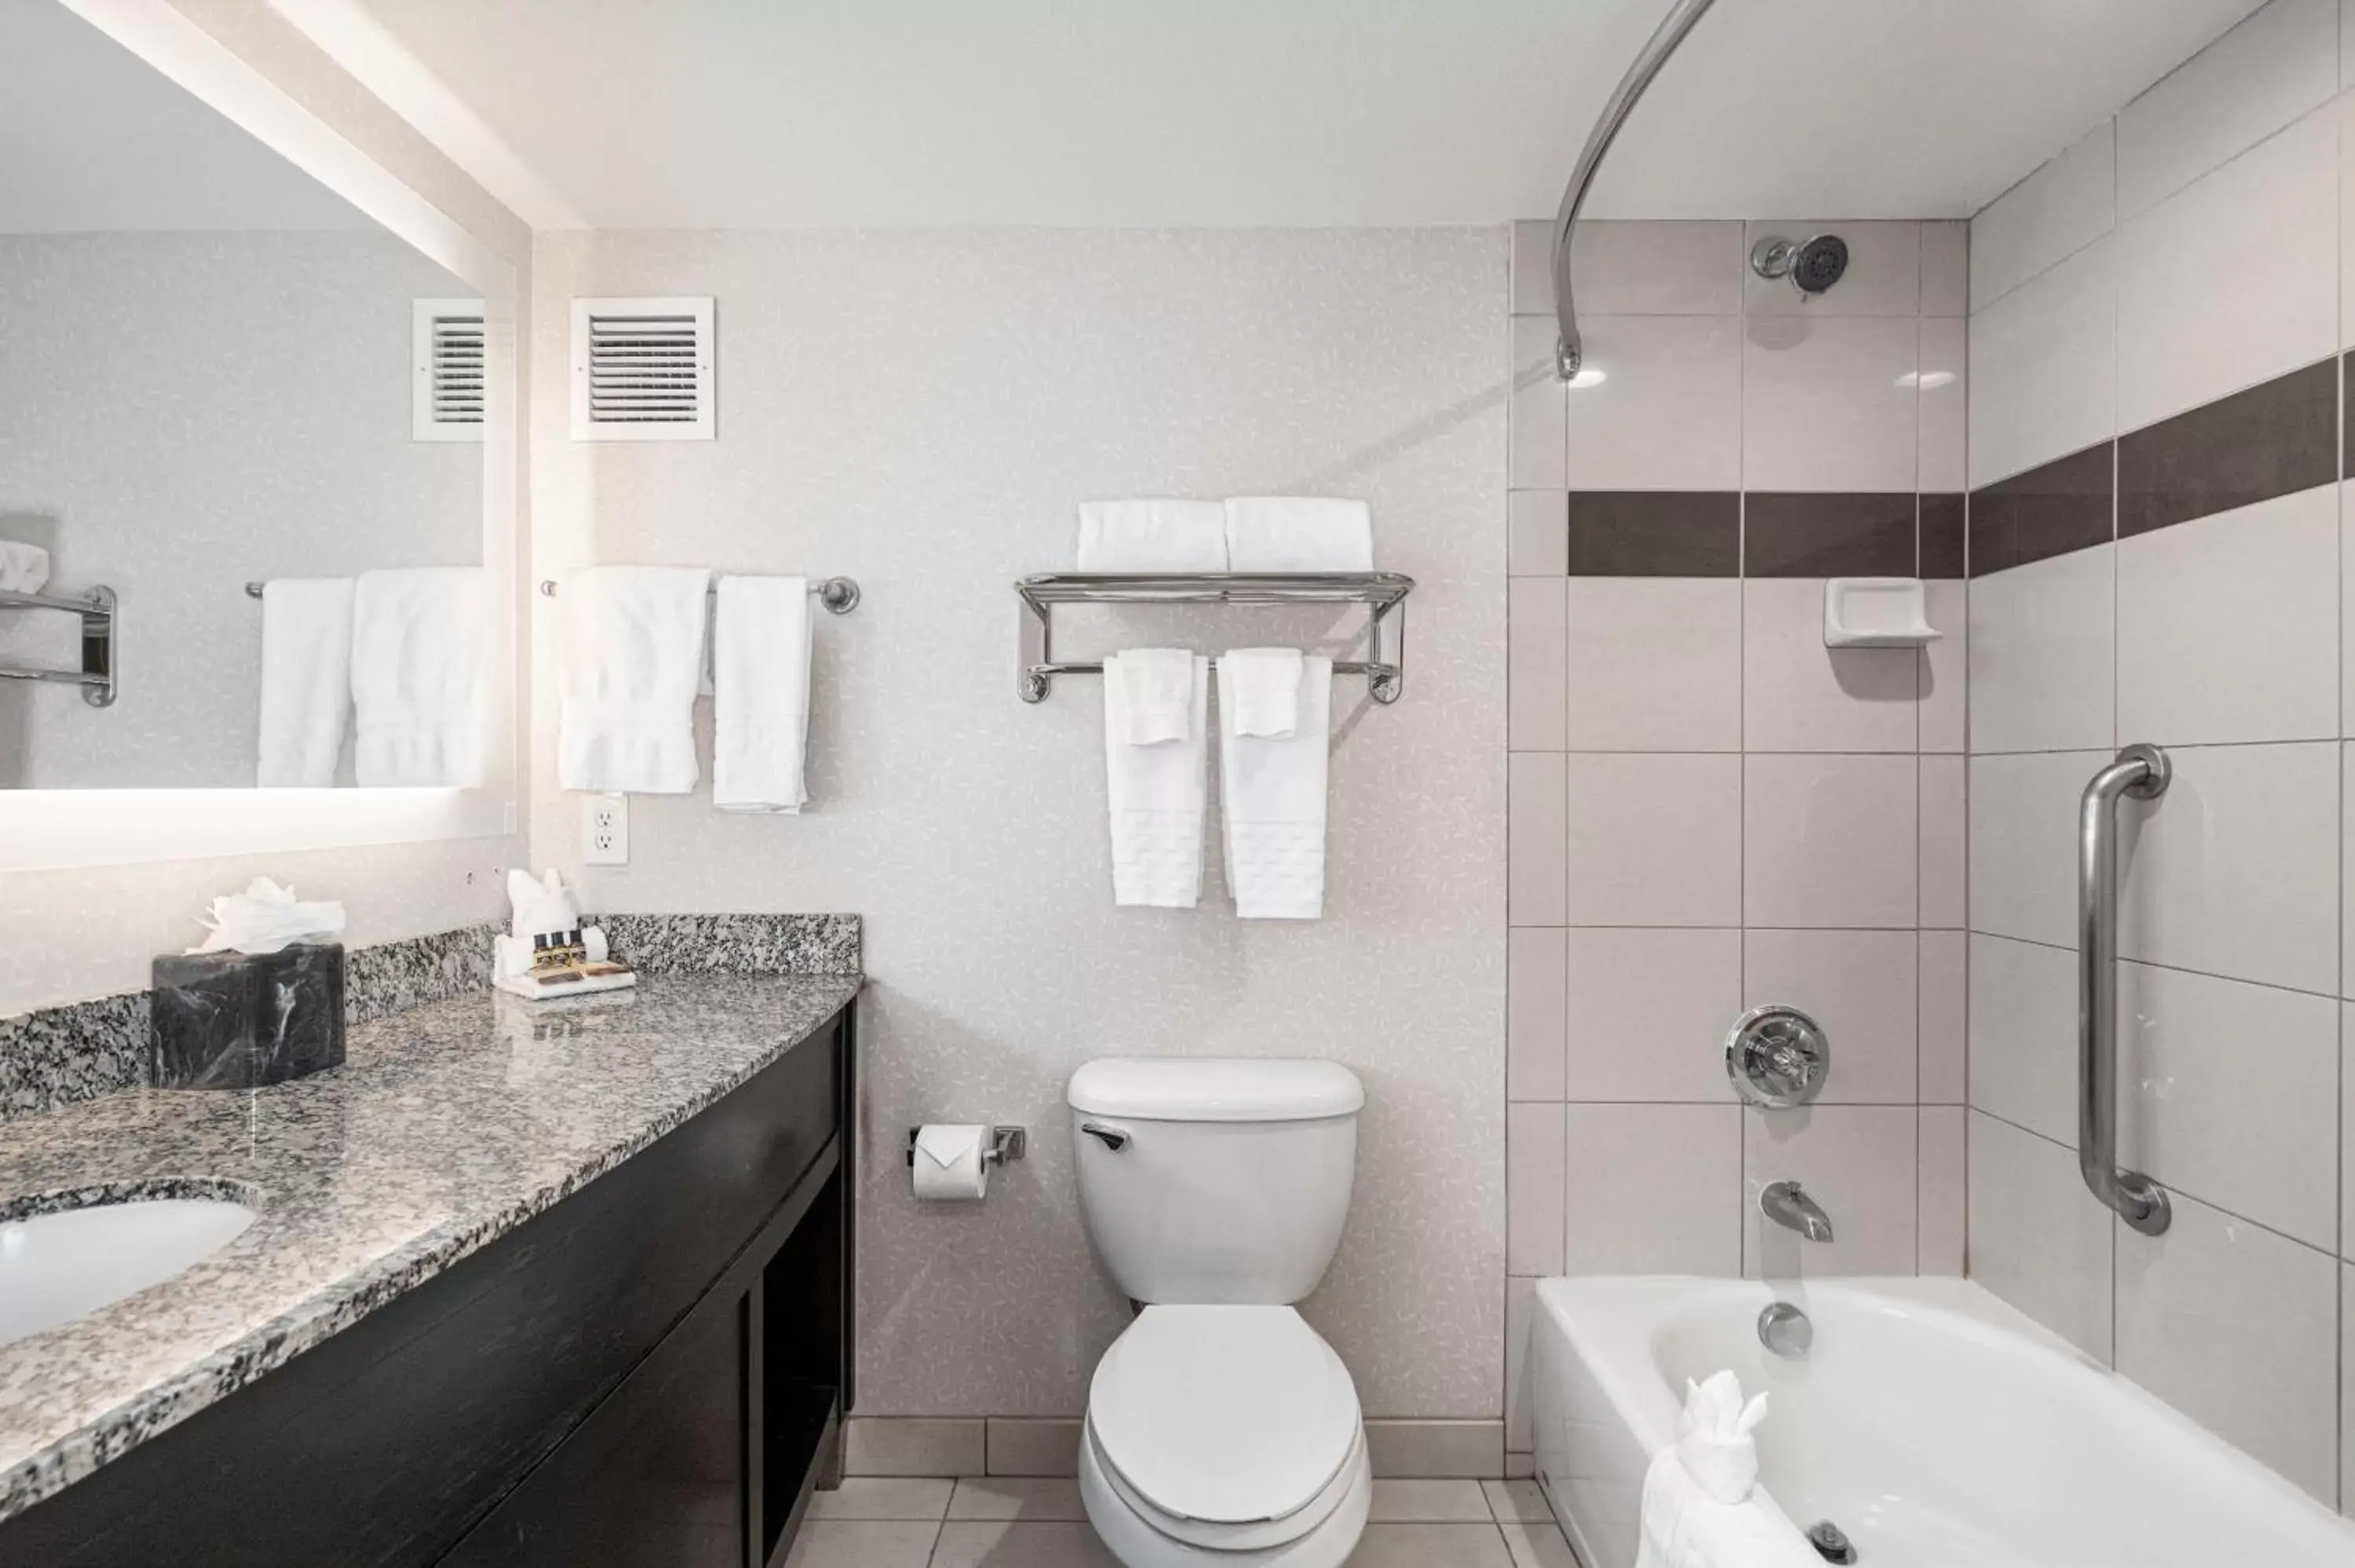 Photo of the whole room, Bathroom in Best Western Plus Marina Gateway Hotel